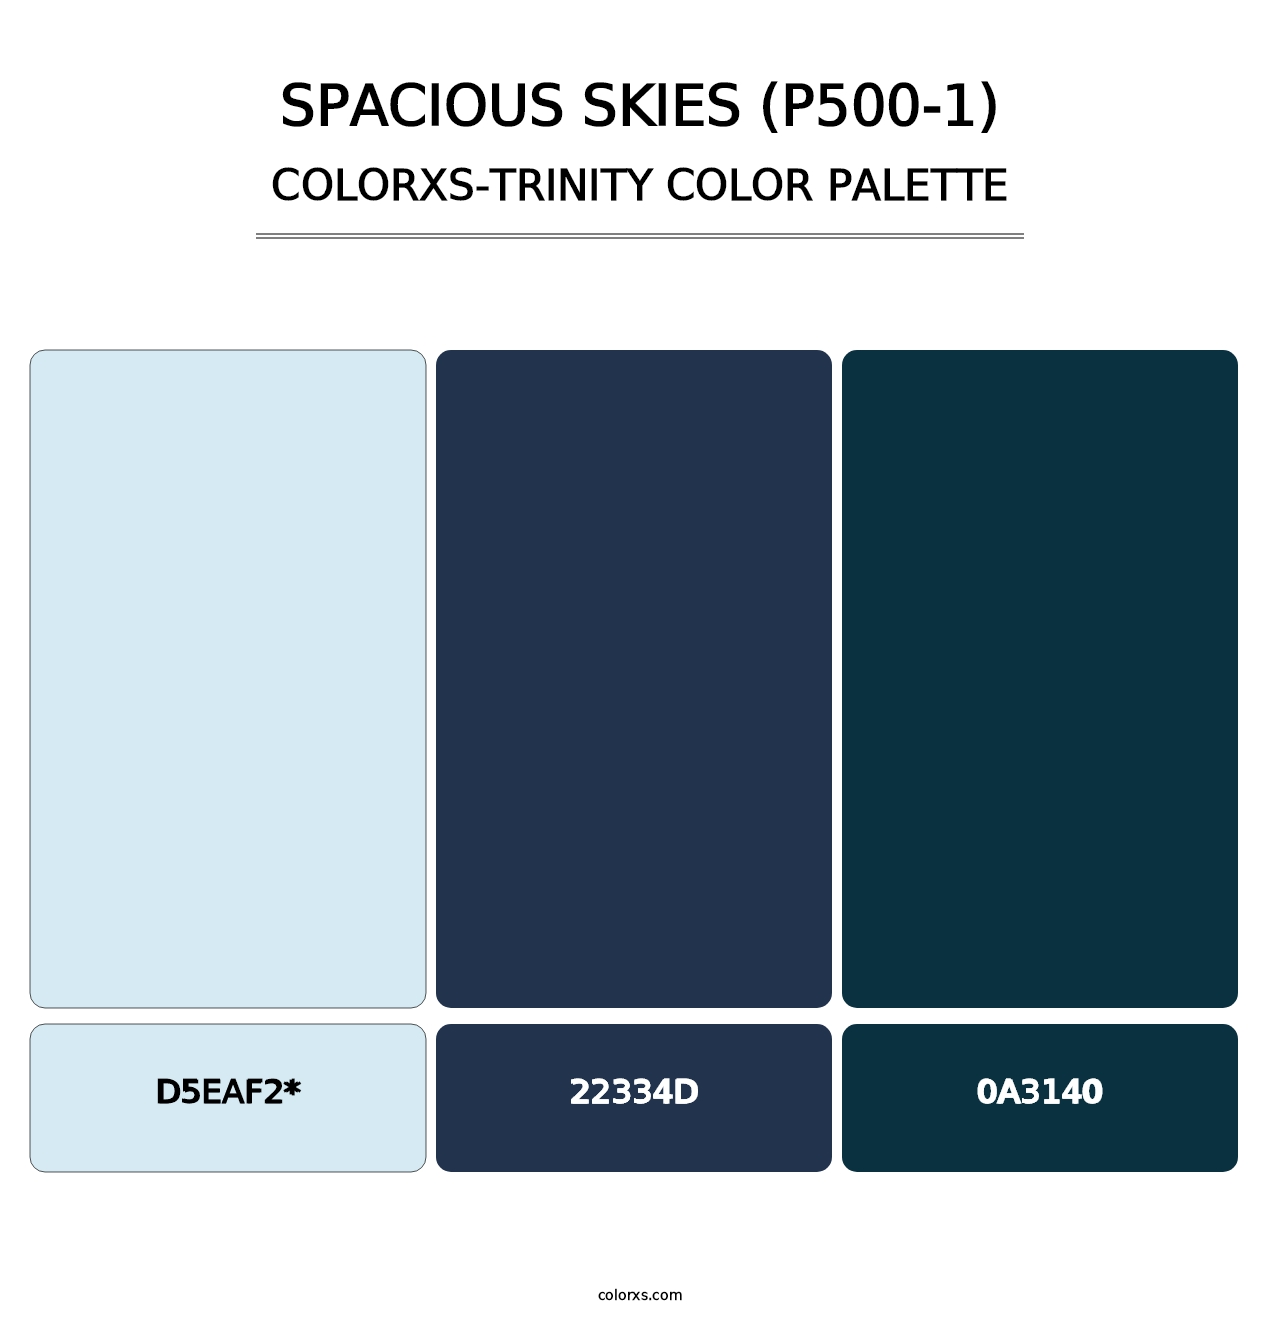 Spacious Skies (P500-1) - Colorxs Trinity Palette